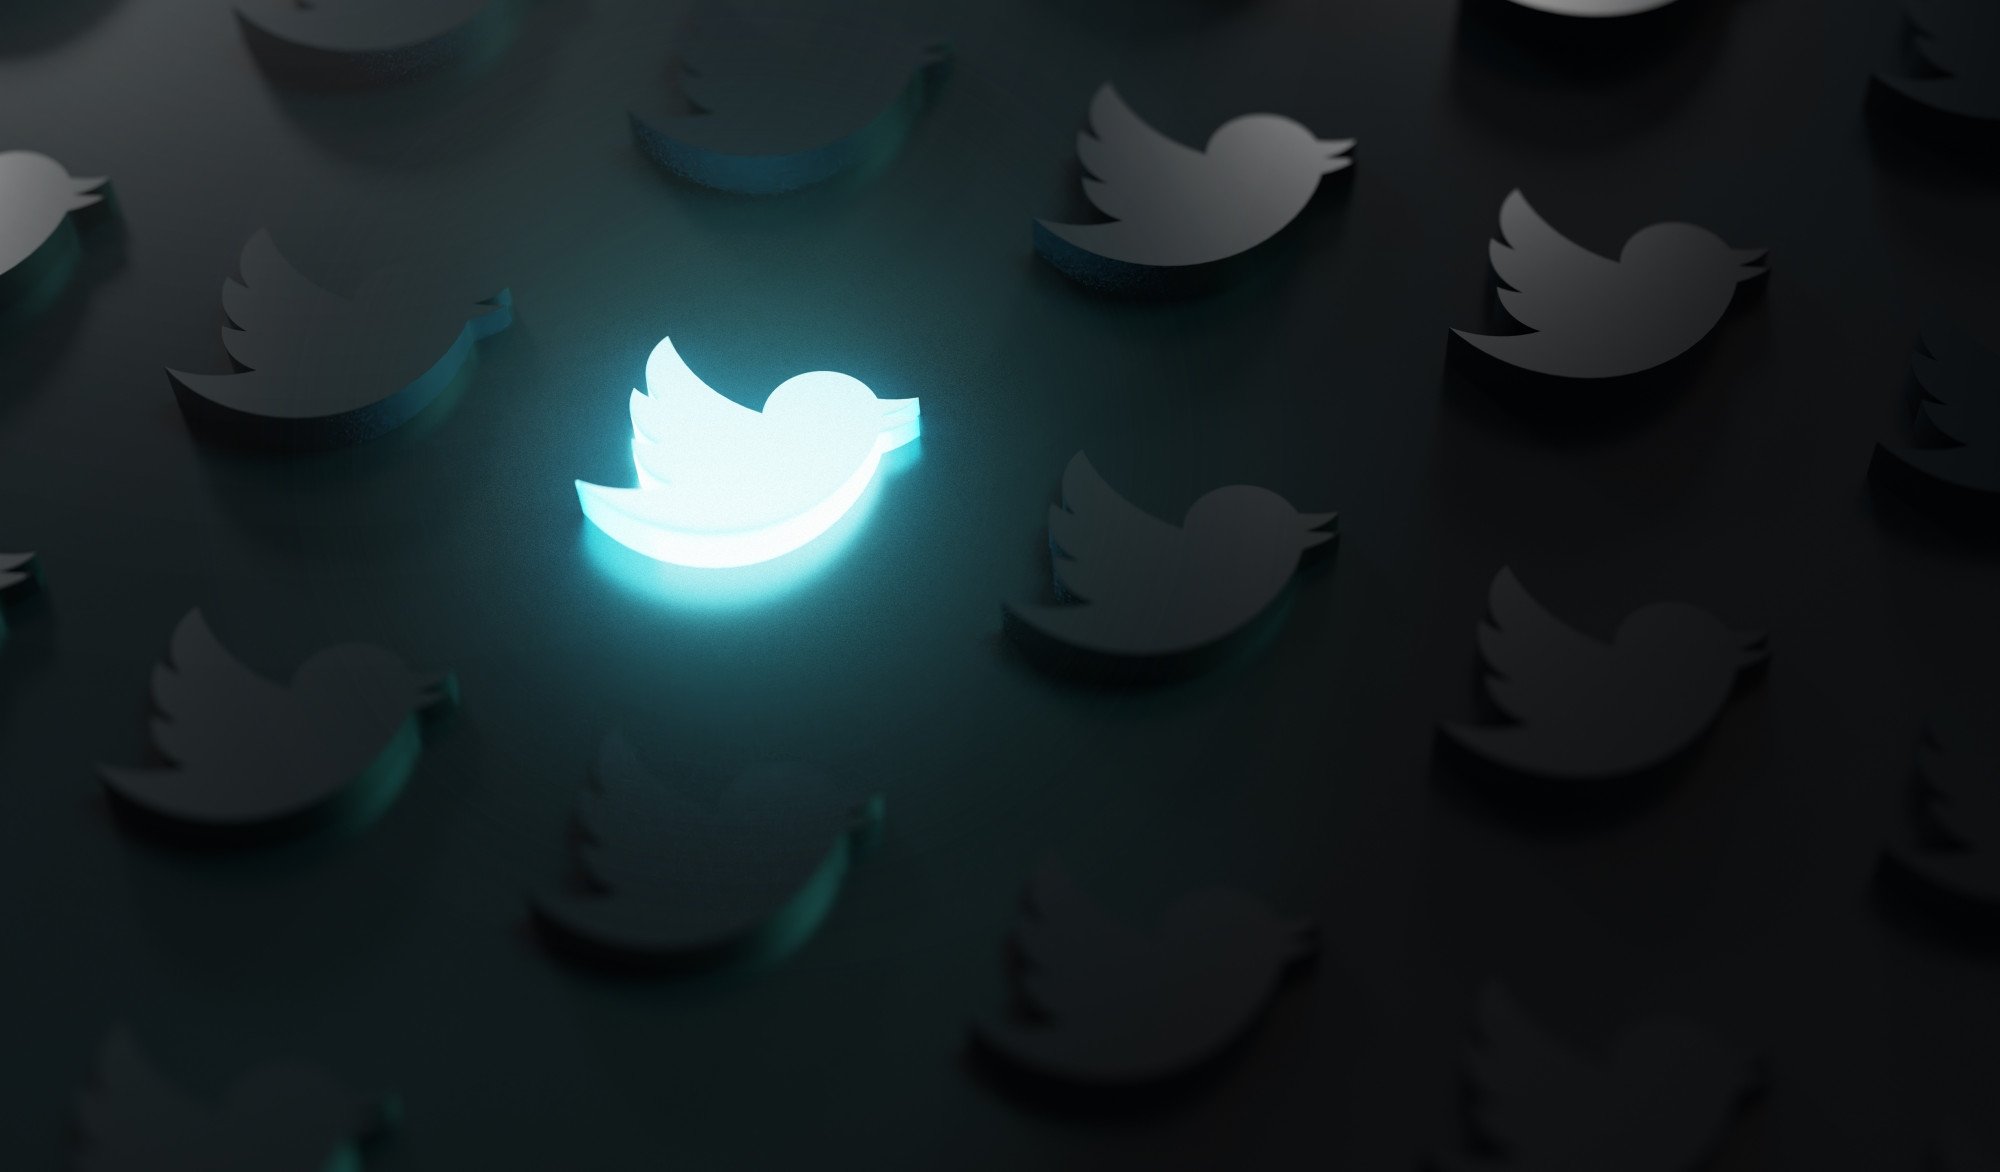 Logo do Twitter com luz acesa junto a outros apagados